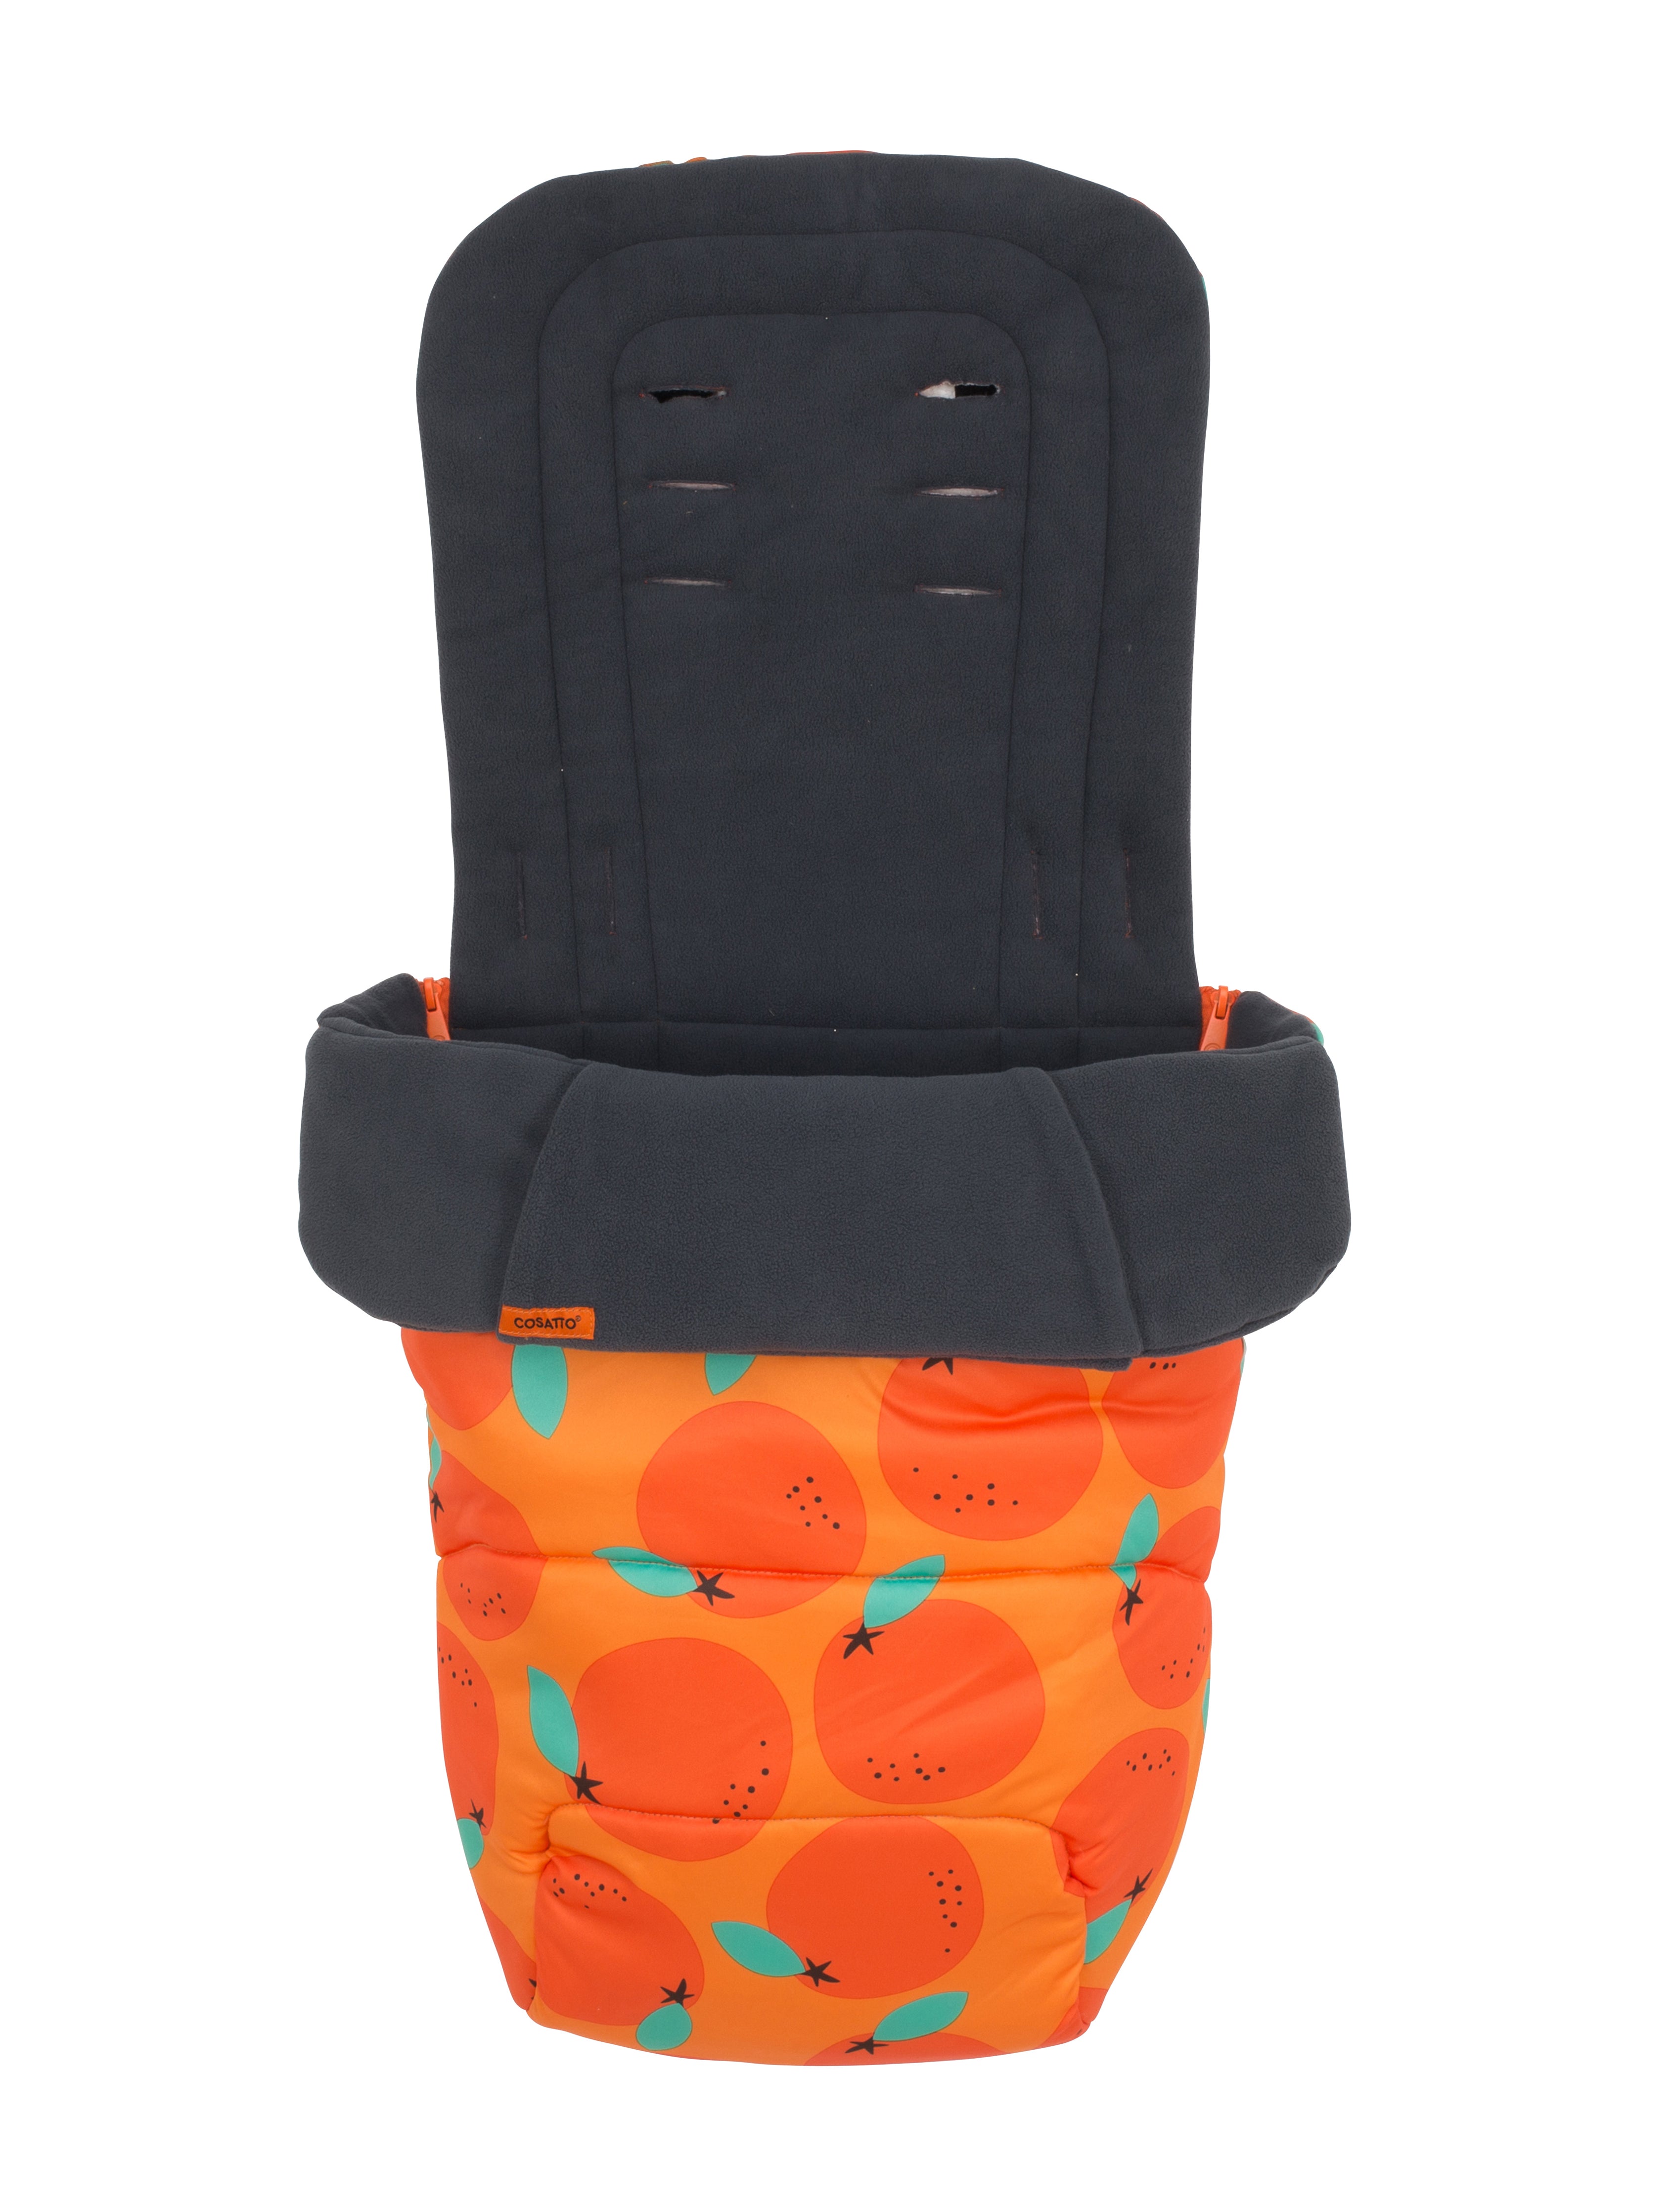 CT5057 Wowee Pushchair and Accessory Bundle So Orangey